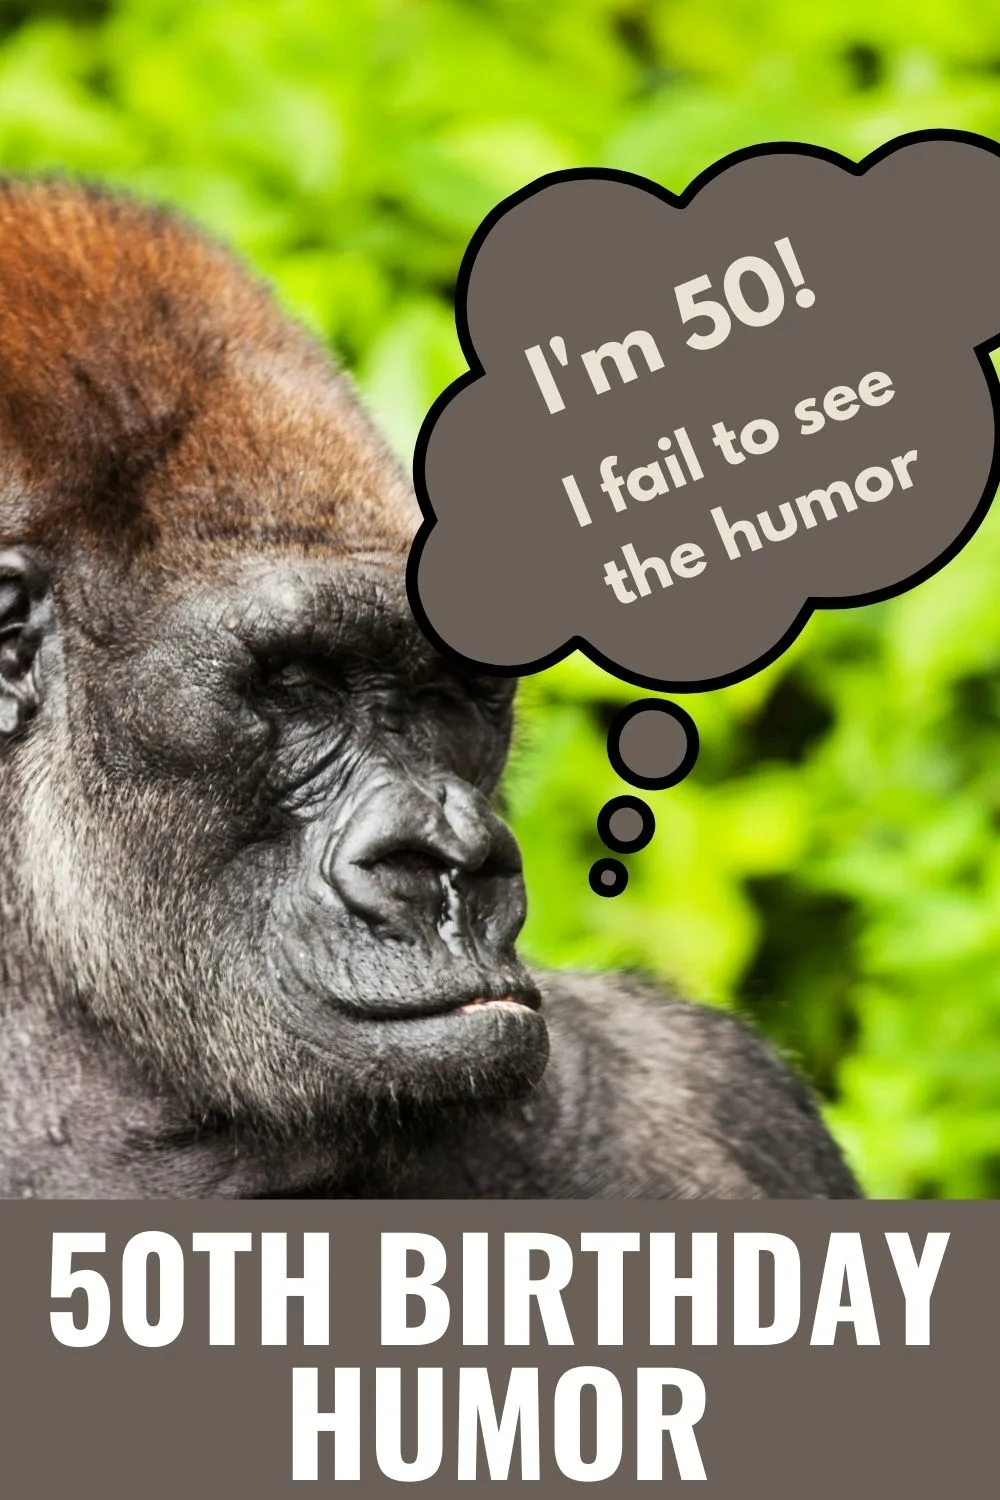 50th birthday humor